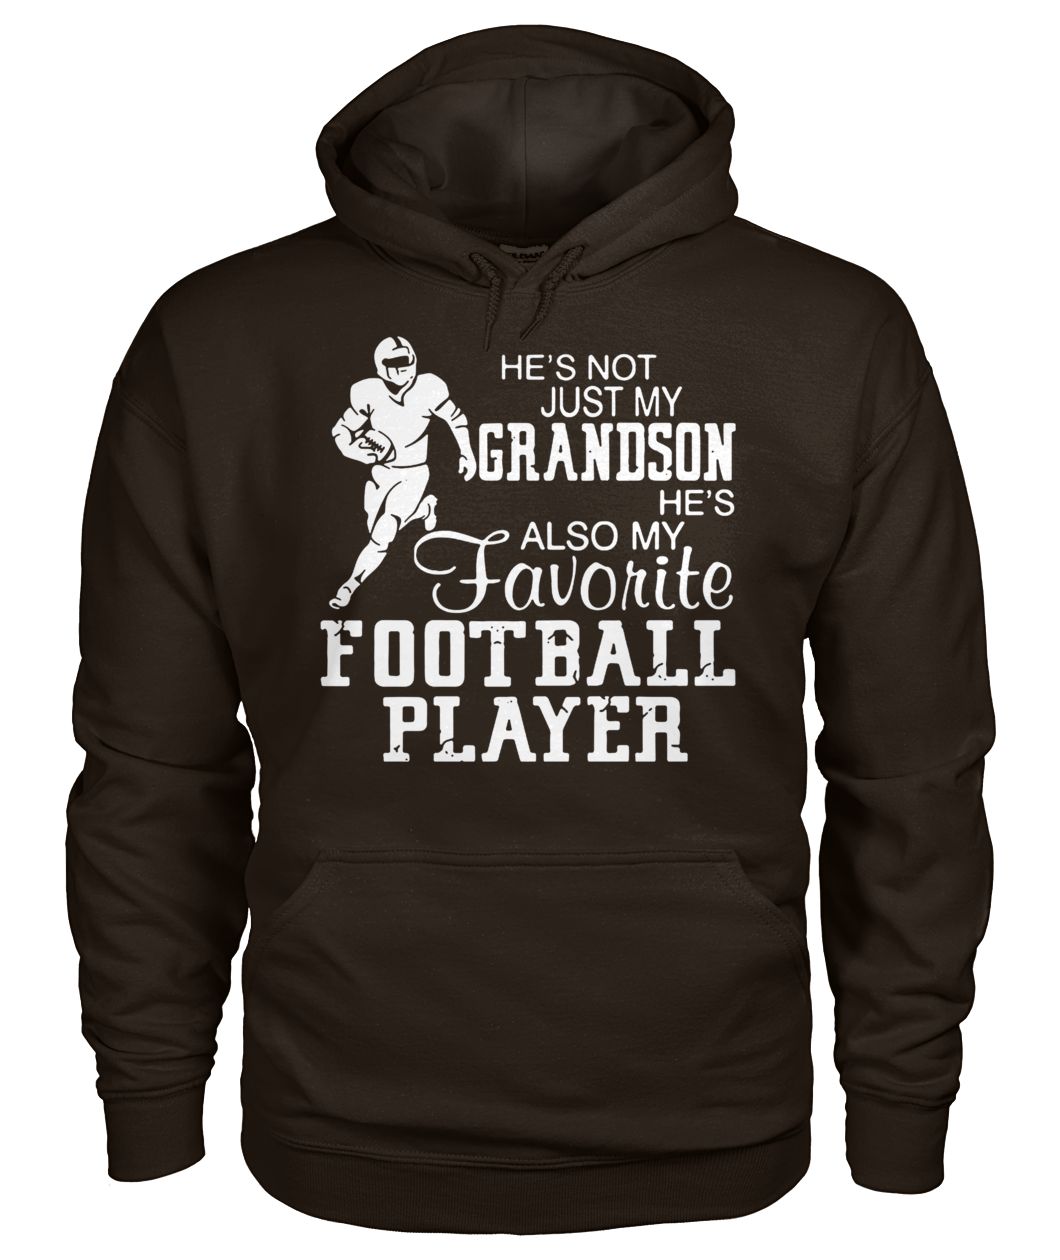 He's not just my grandson he's also my favorite football player gildan hoodie